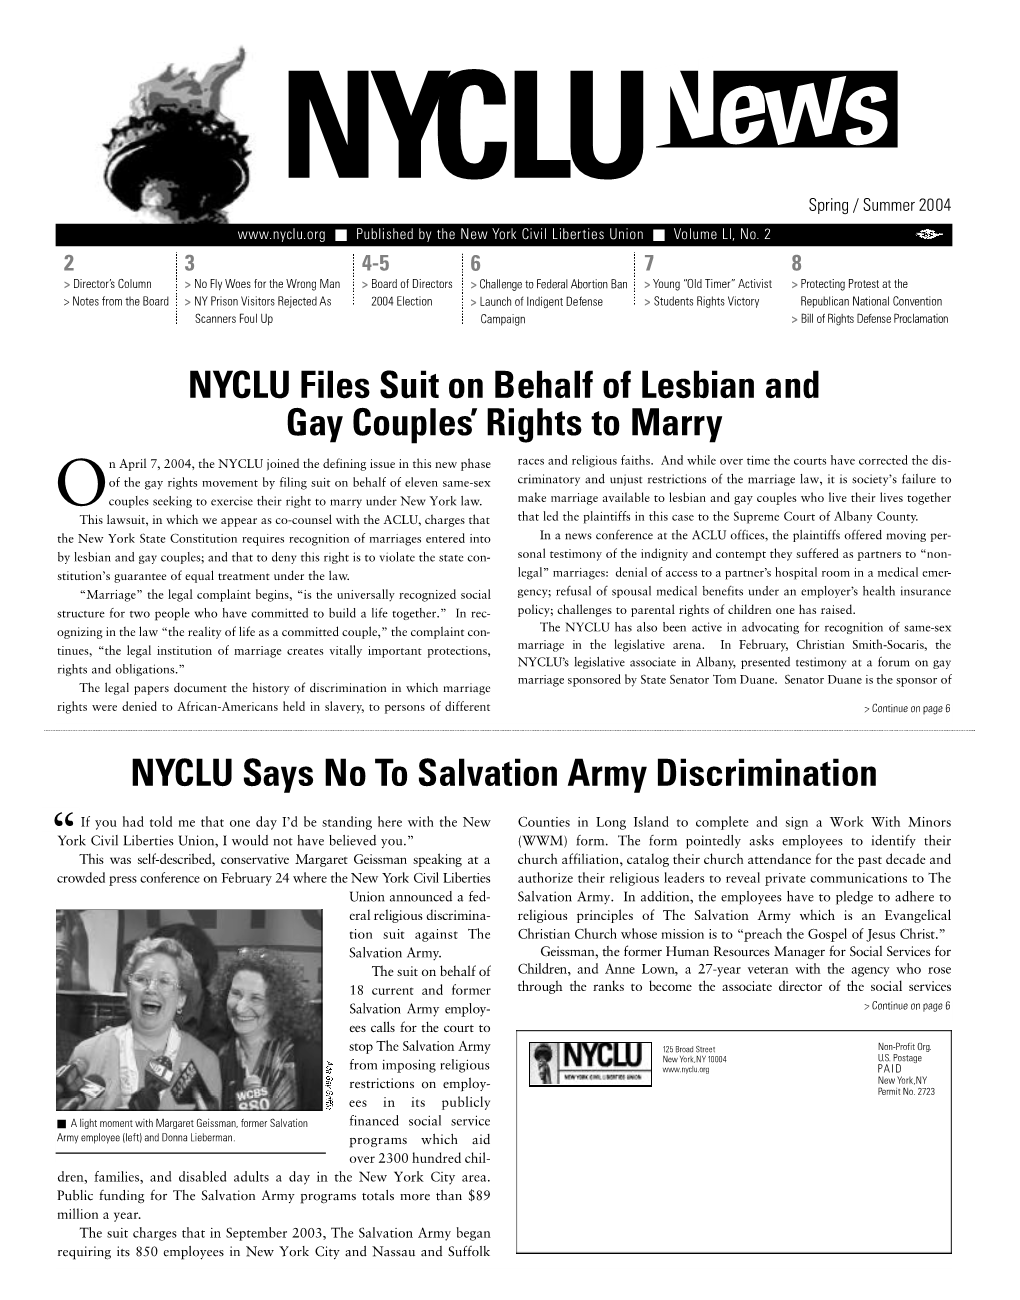 NYCLU News Spring/Summer 2004